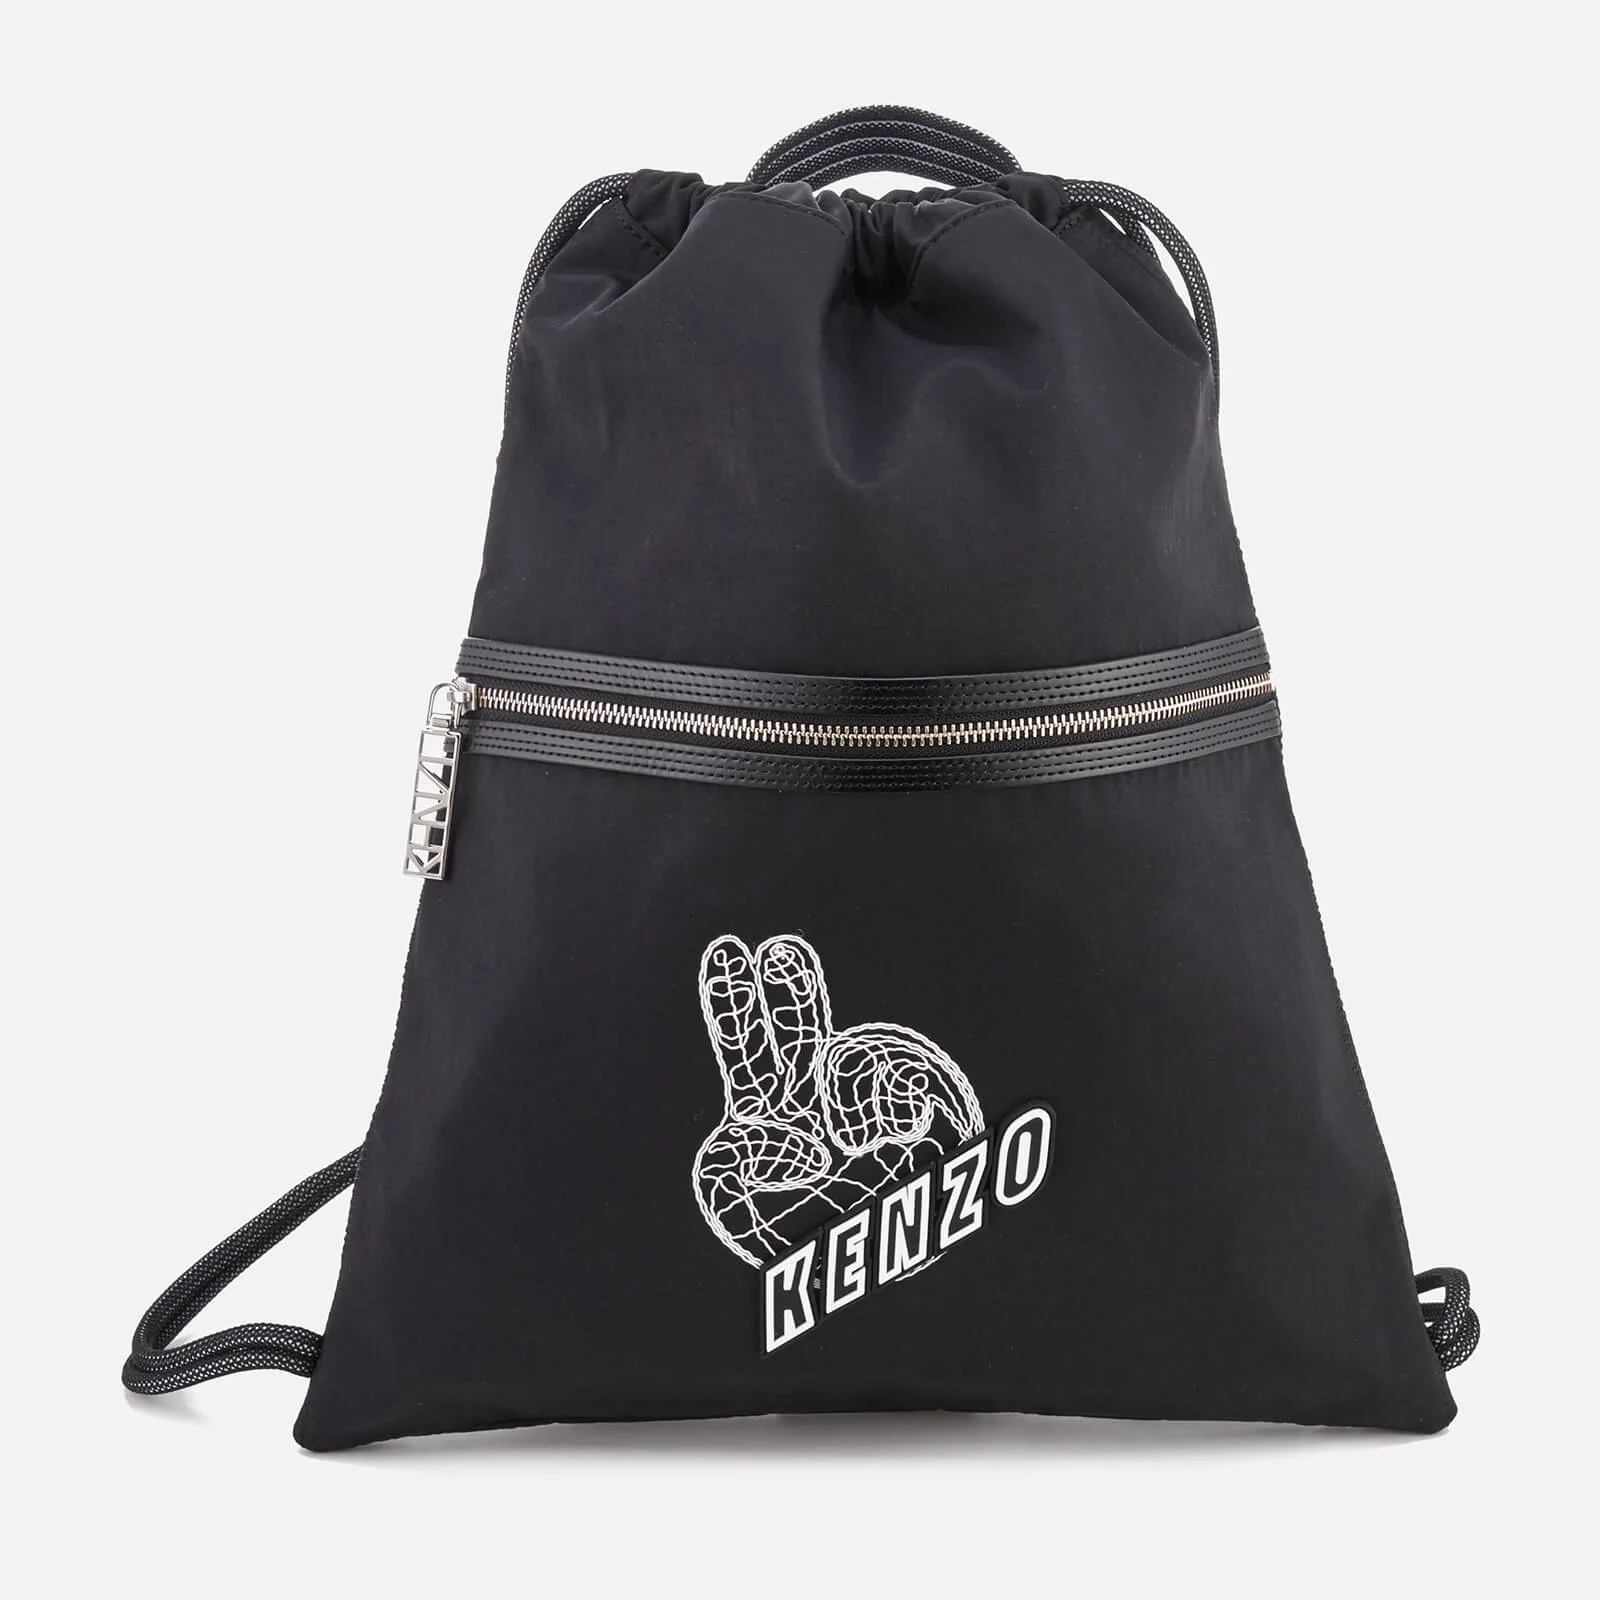 KENZO Men's Essentials Olympic Backpack - Black Image 1